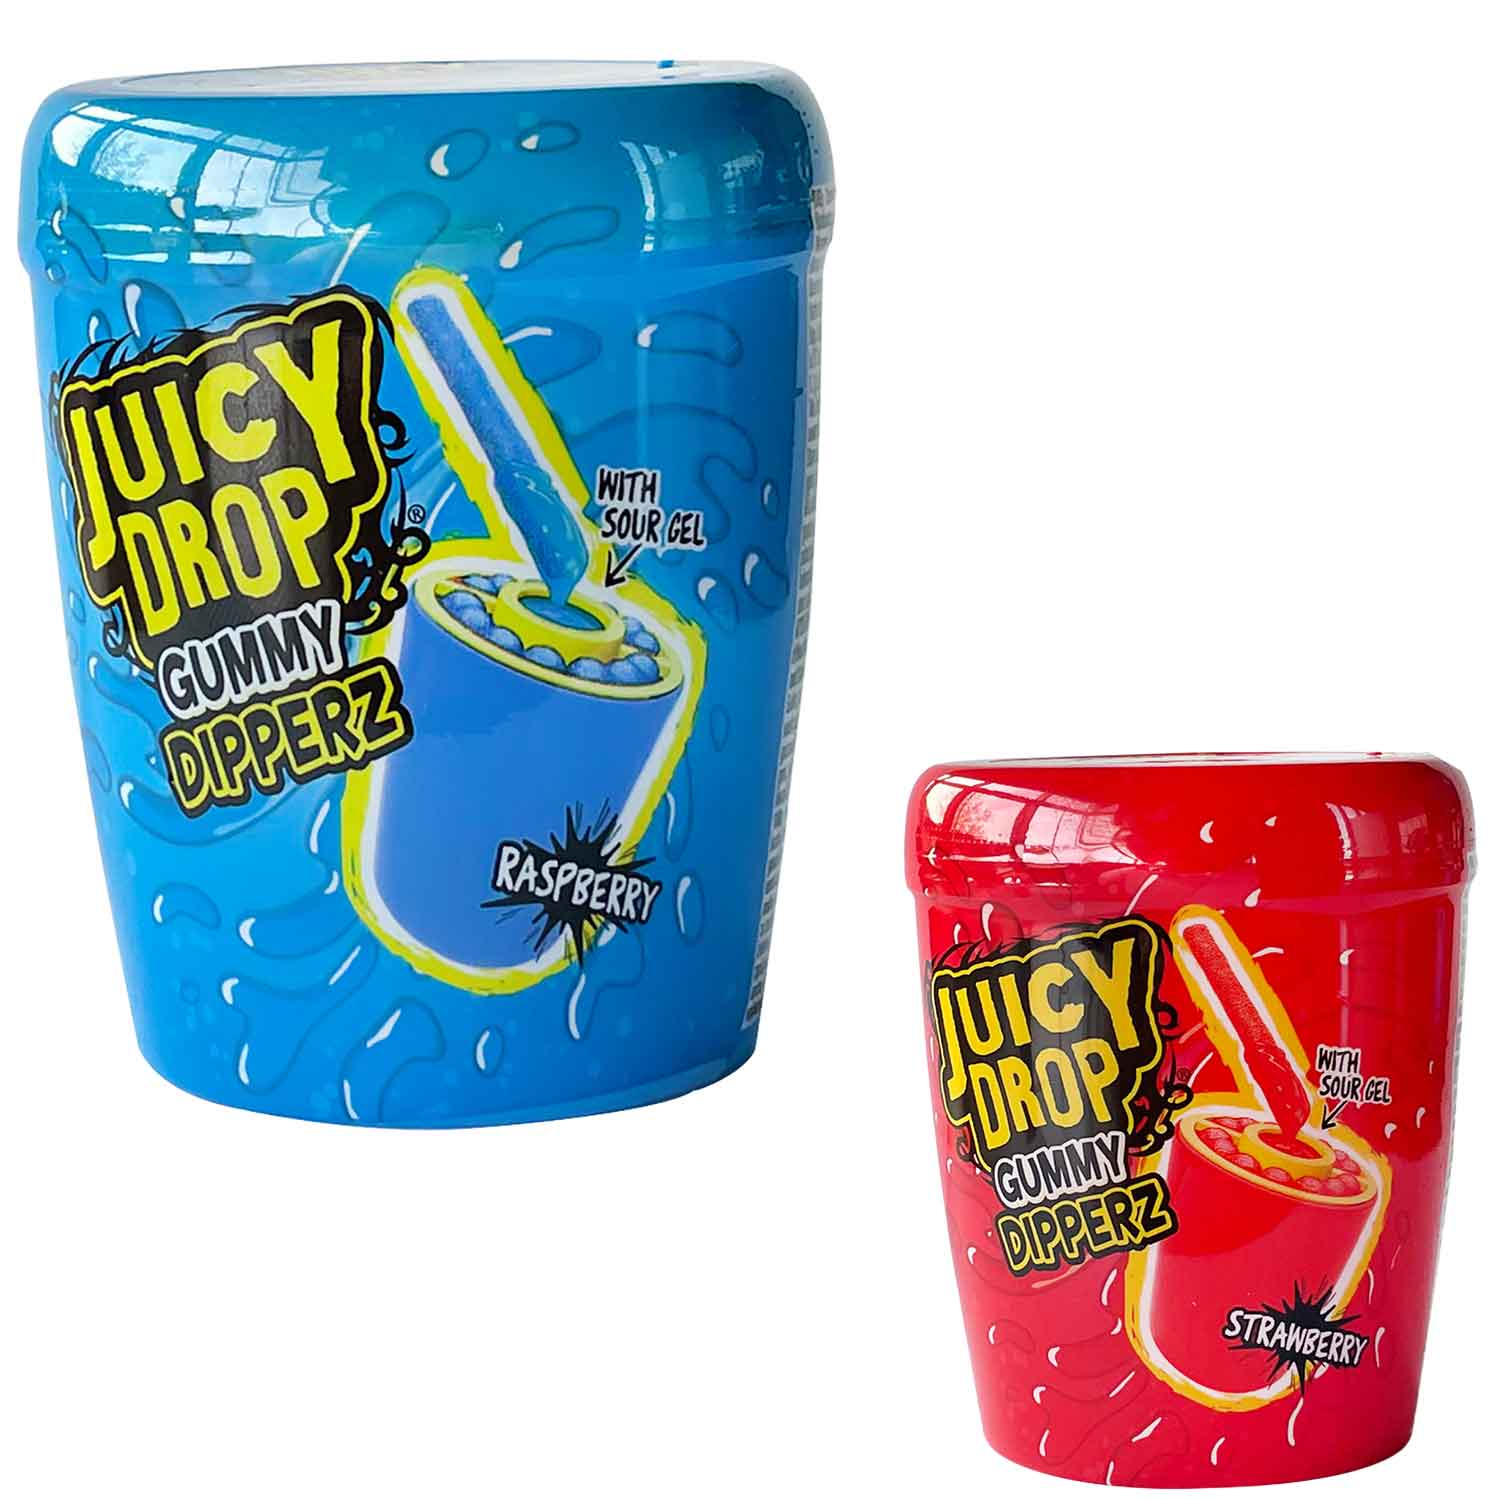 Juicy Drop Gummy Dipperz (96g)